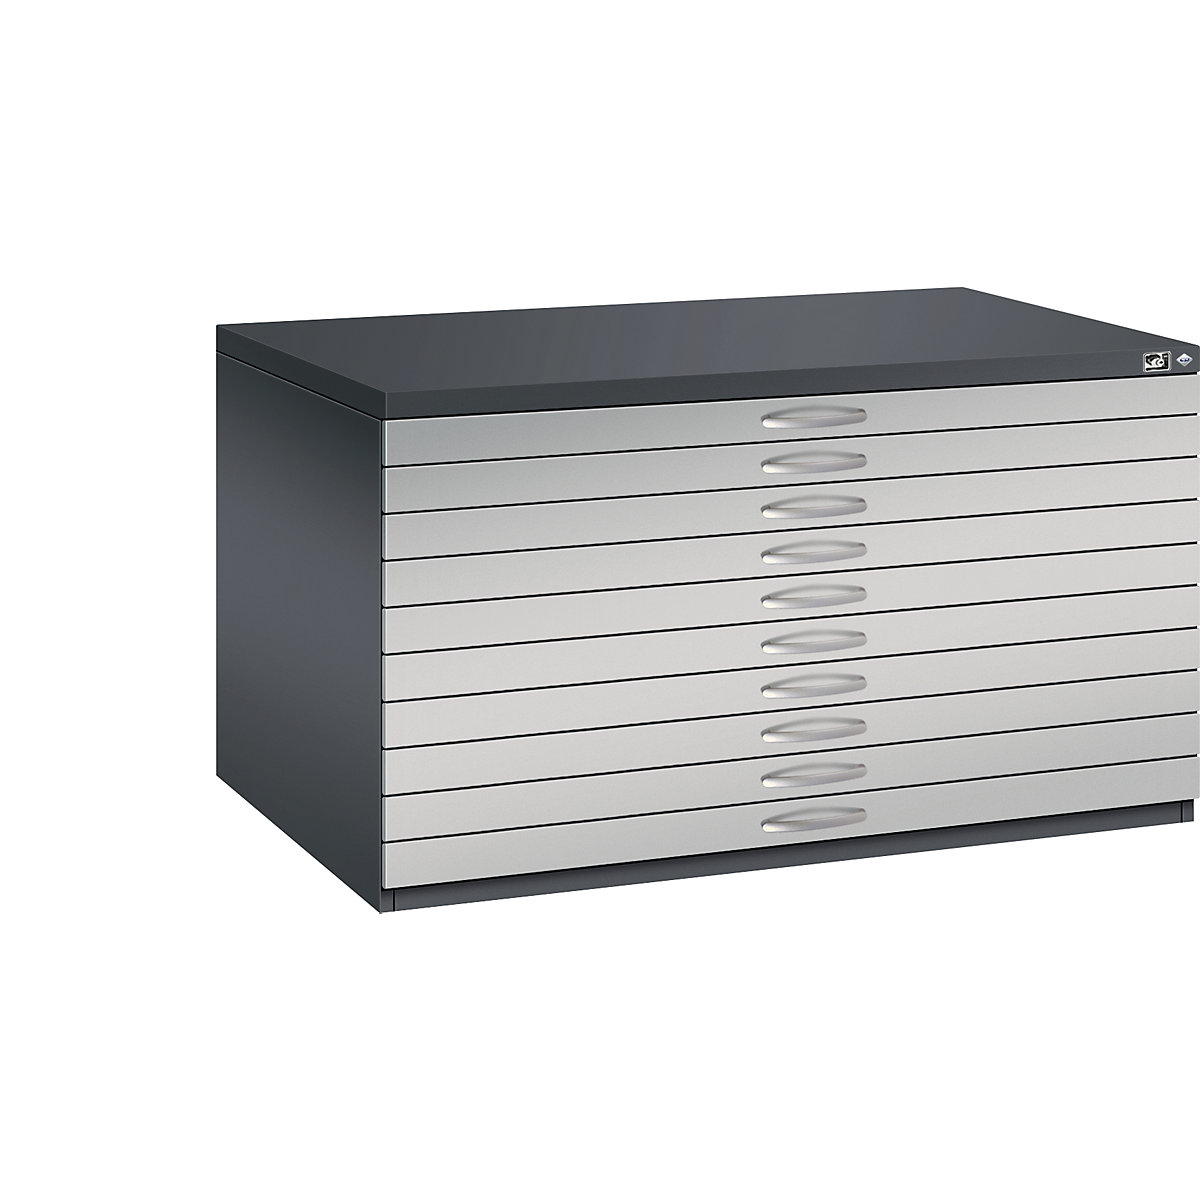 Tekeningkast – C+P, A0, 10 laden, hoogte 760 mm, zwartgrijs/blank aluminiumkleurig-15